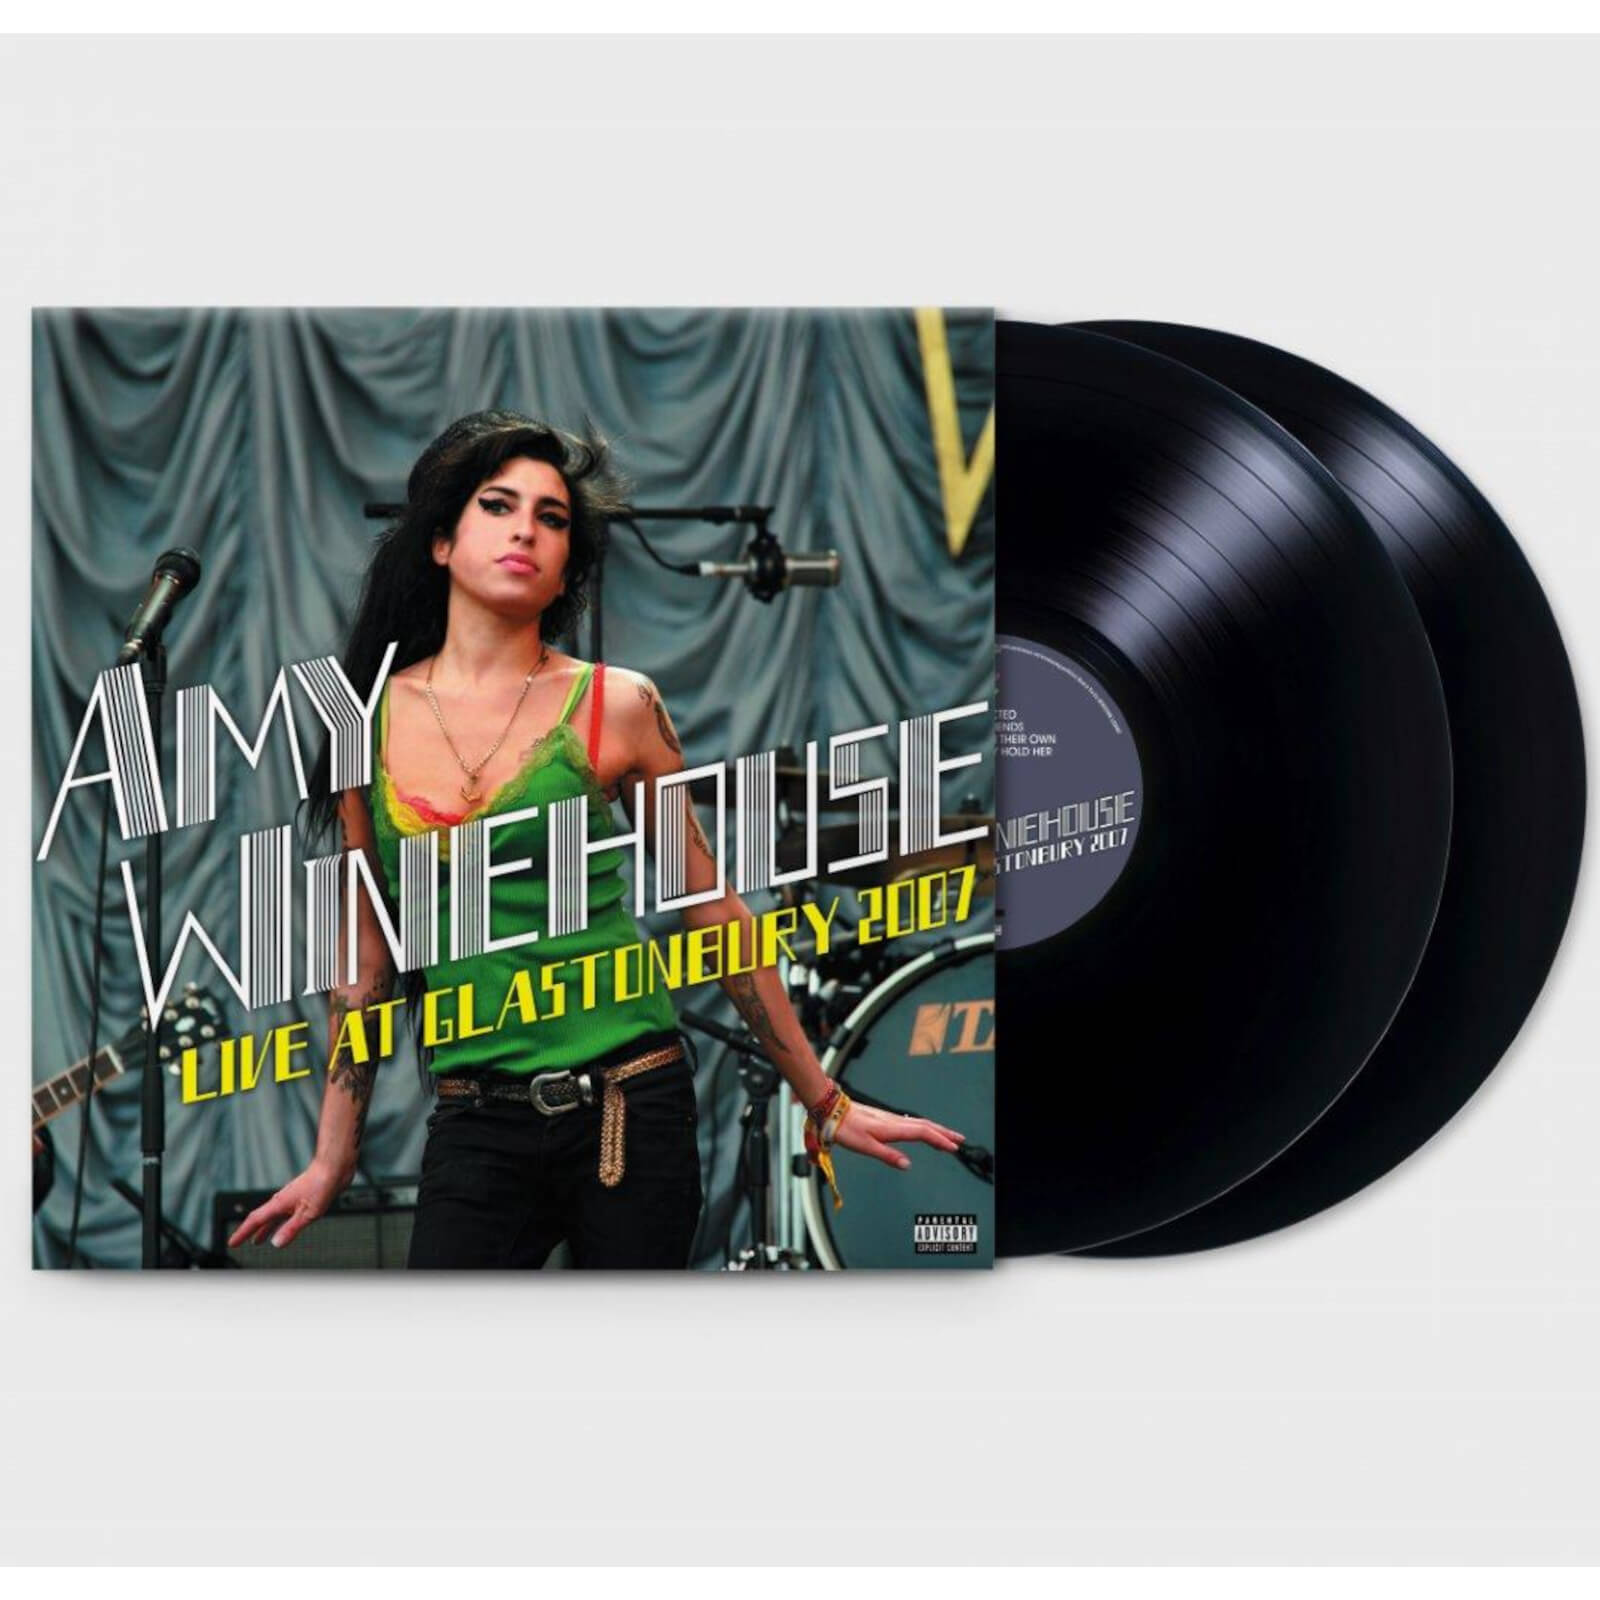 Amy Winehouse - Live at Glastonbury 2007 2LP